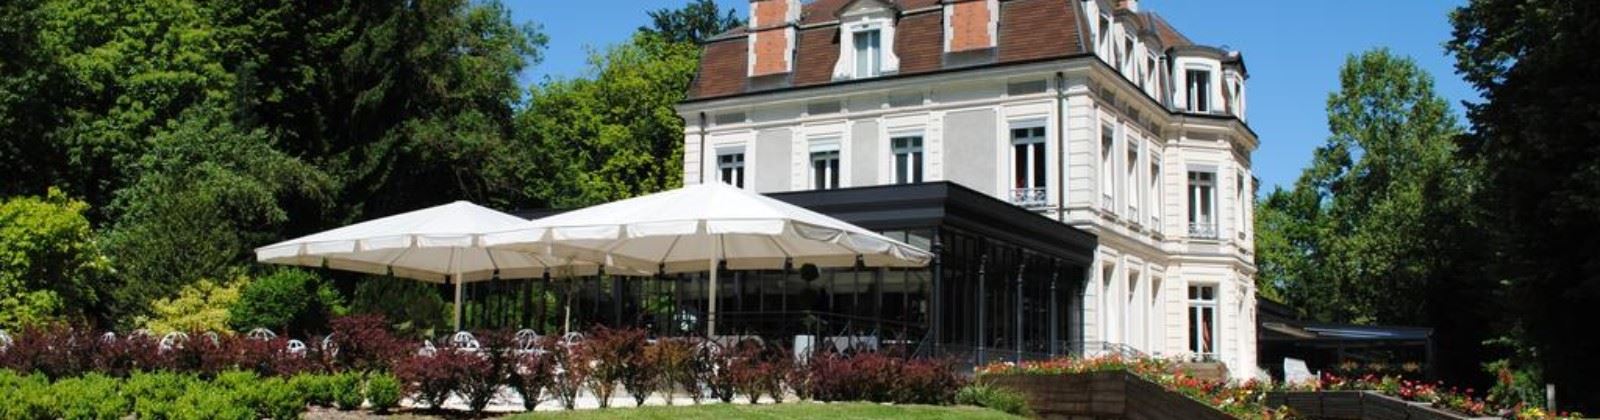 OLEVENE image - chateau-de-la-dame-blanche-olevene-hotel-restaurant-convention-seminaire-